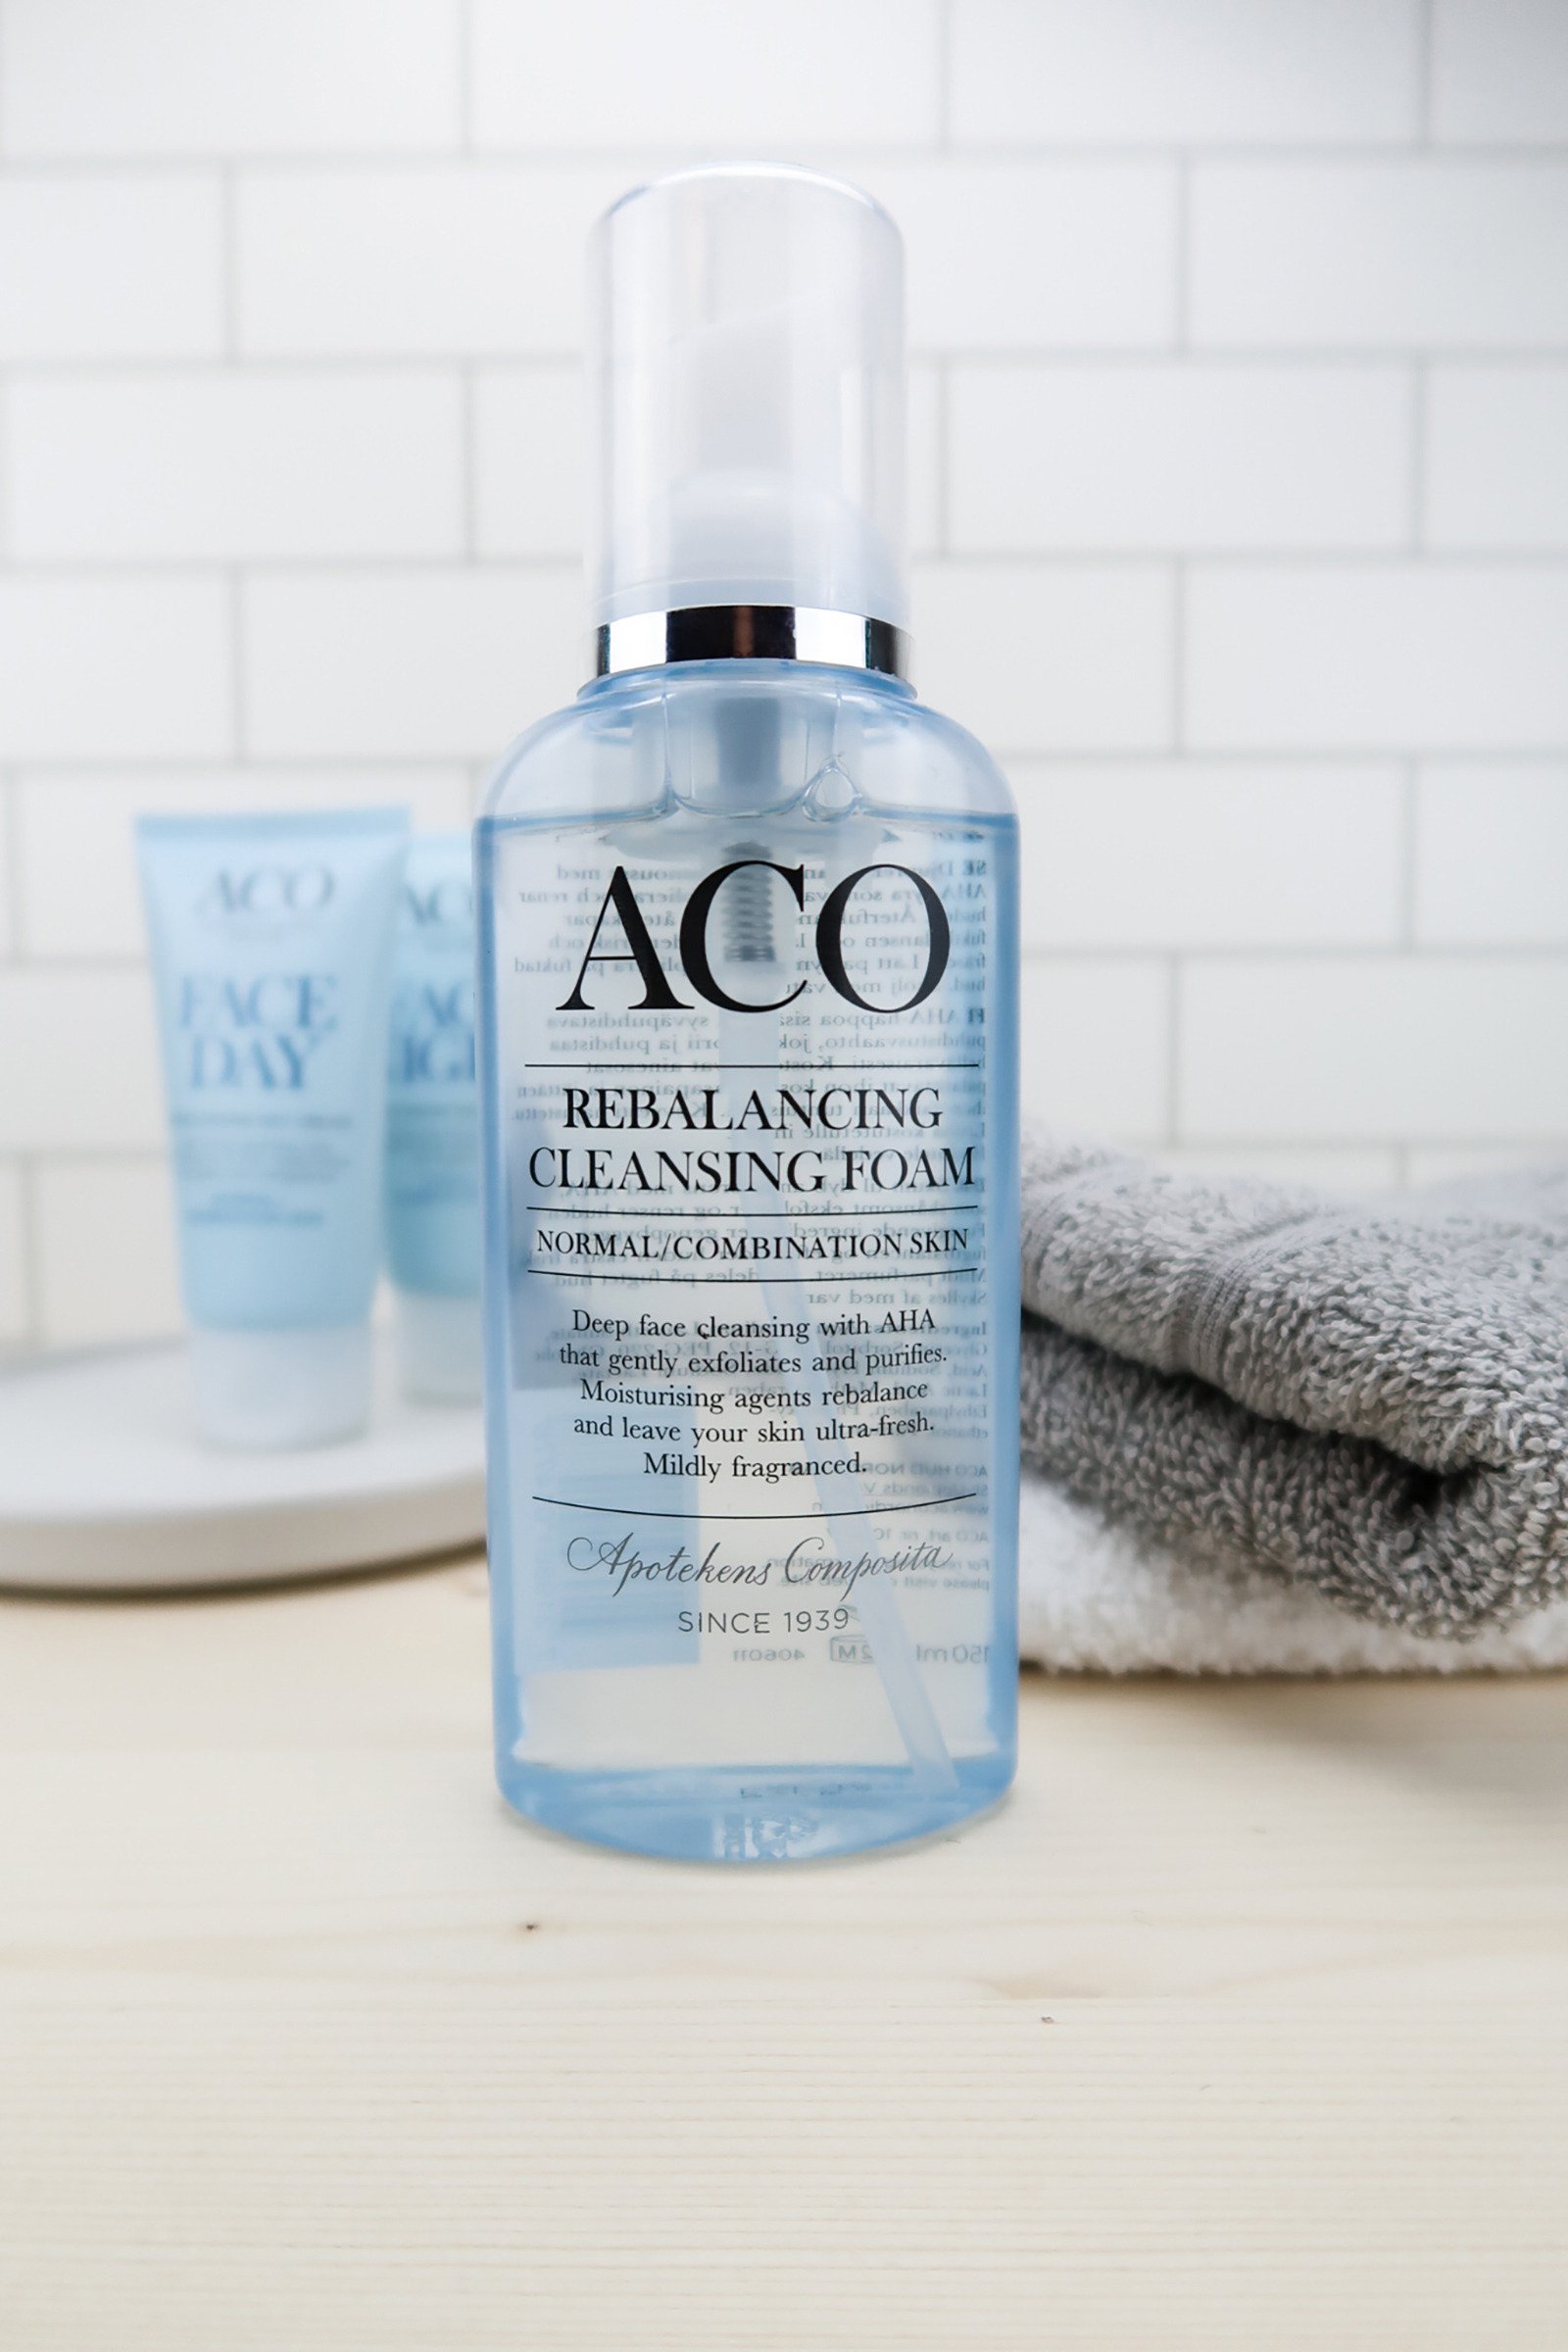 Aco Face Rebalancing Cleansing Foam Rengöring Mousse 150 ml